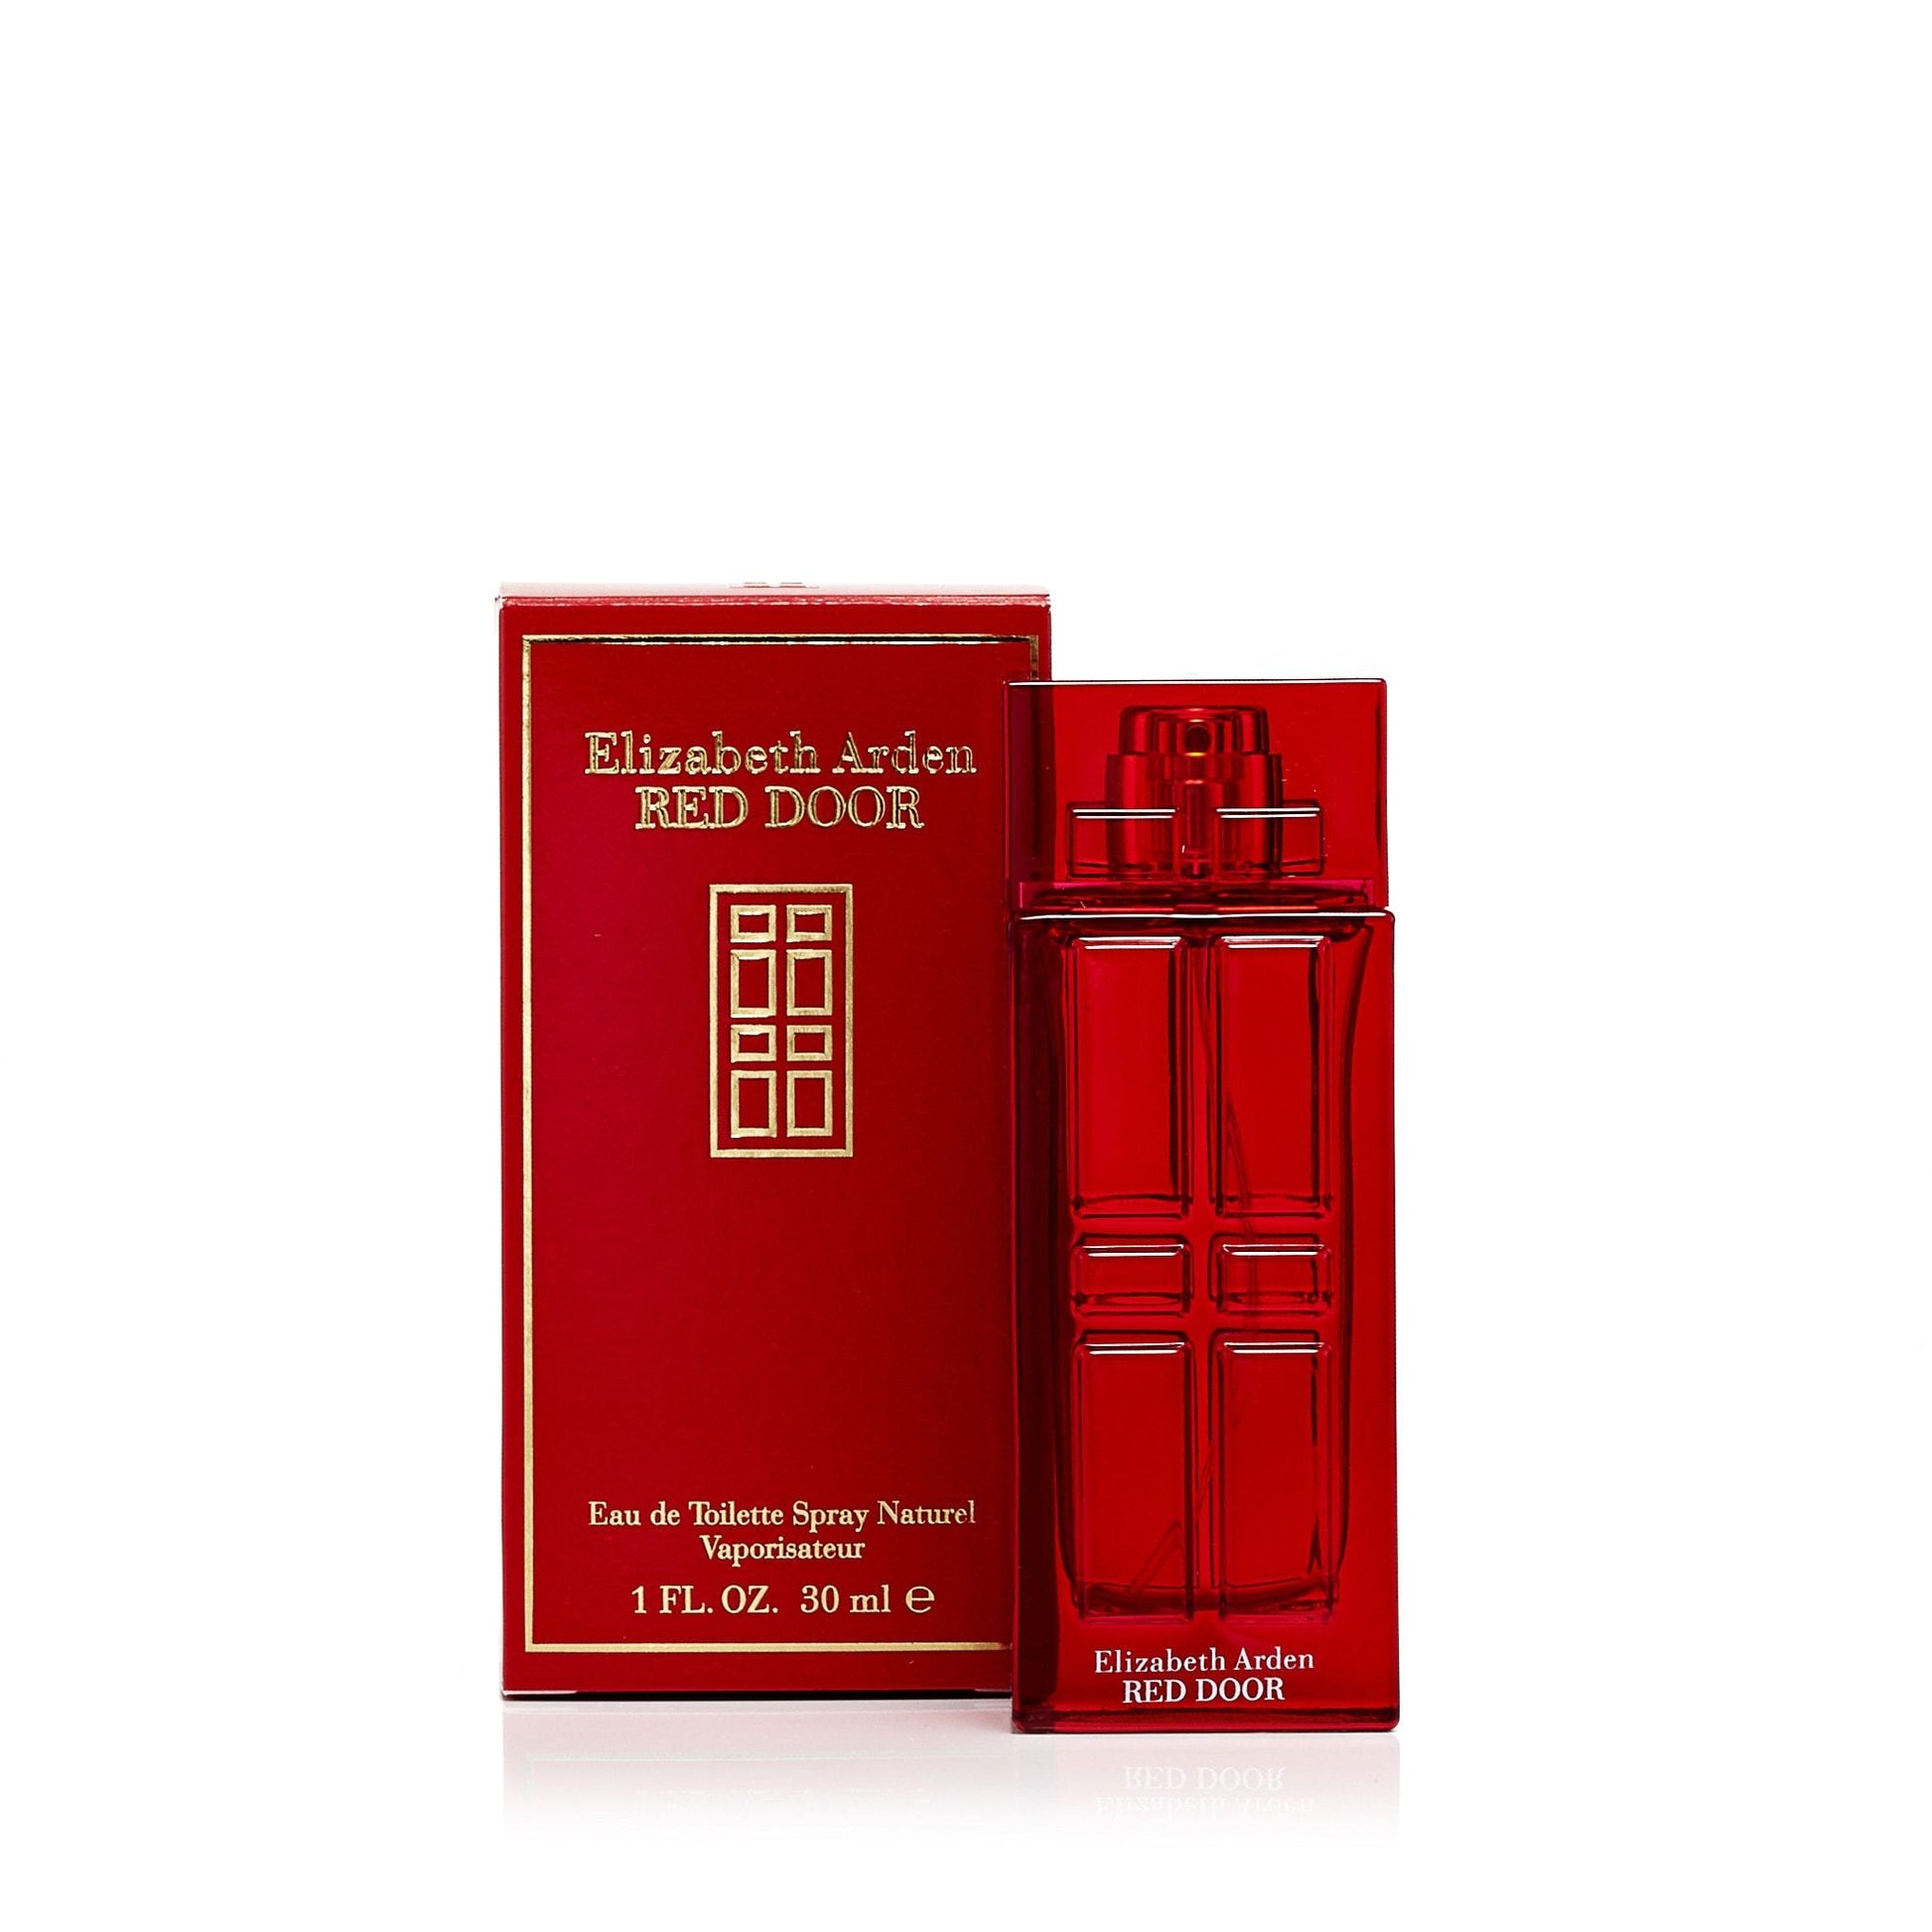 Red Door Eau de Toilette Spray for Women by Elizabeth Arden, Product image 2